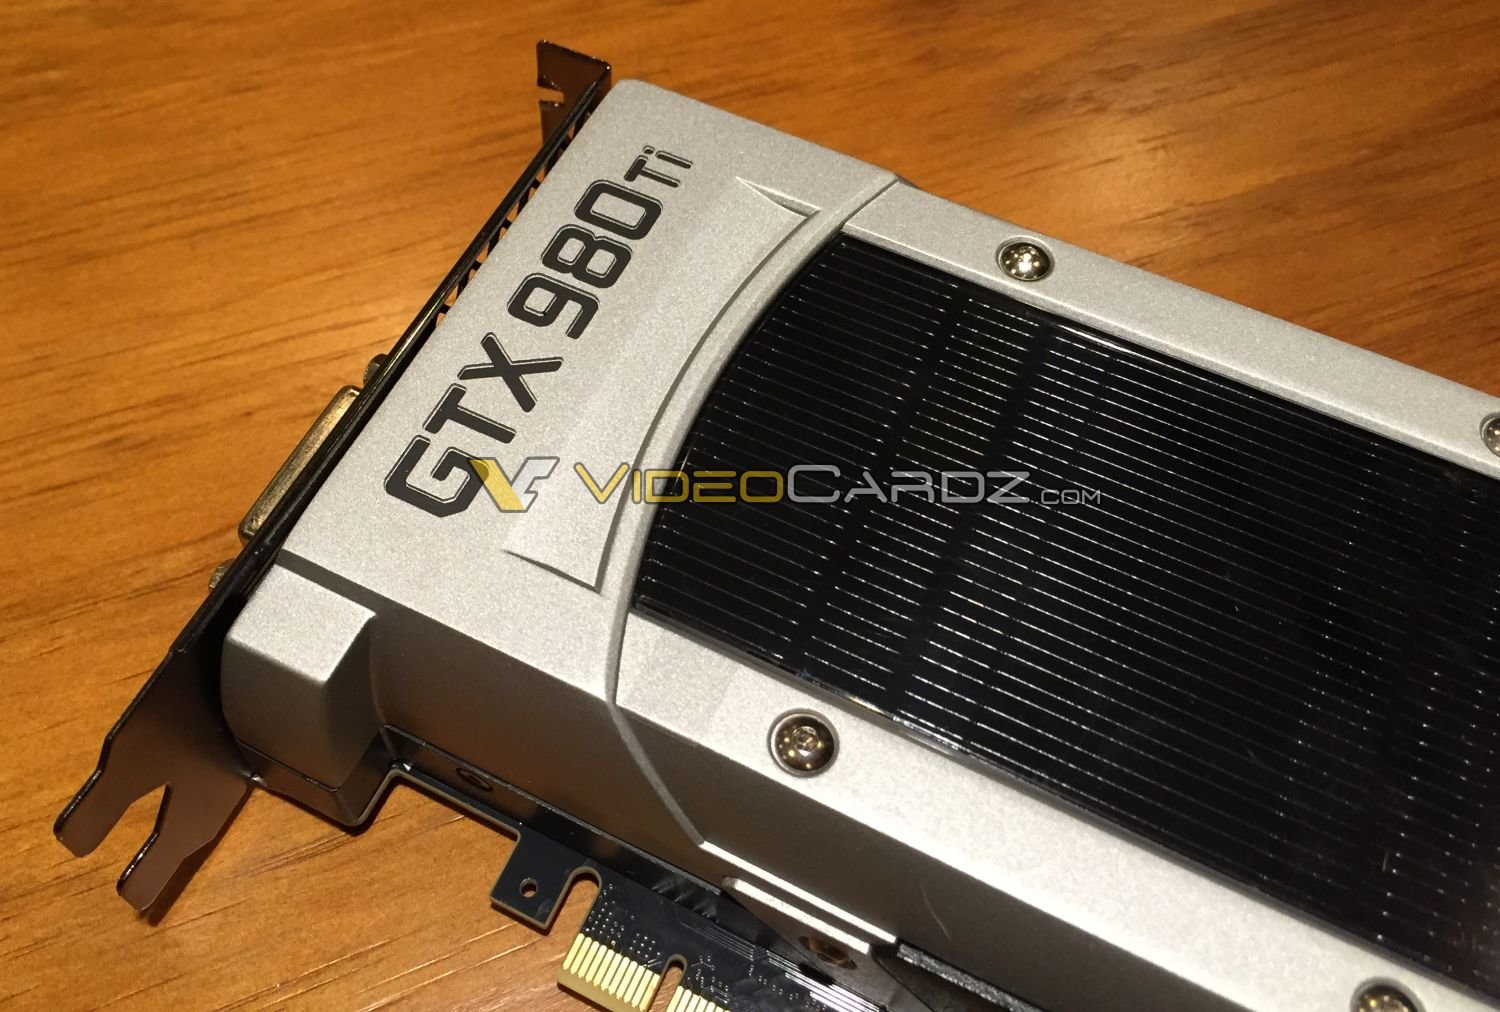 Nvidia GeForce GTX 980 Ti